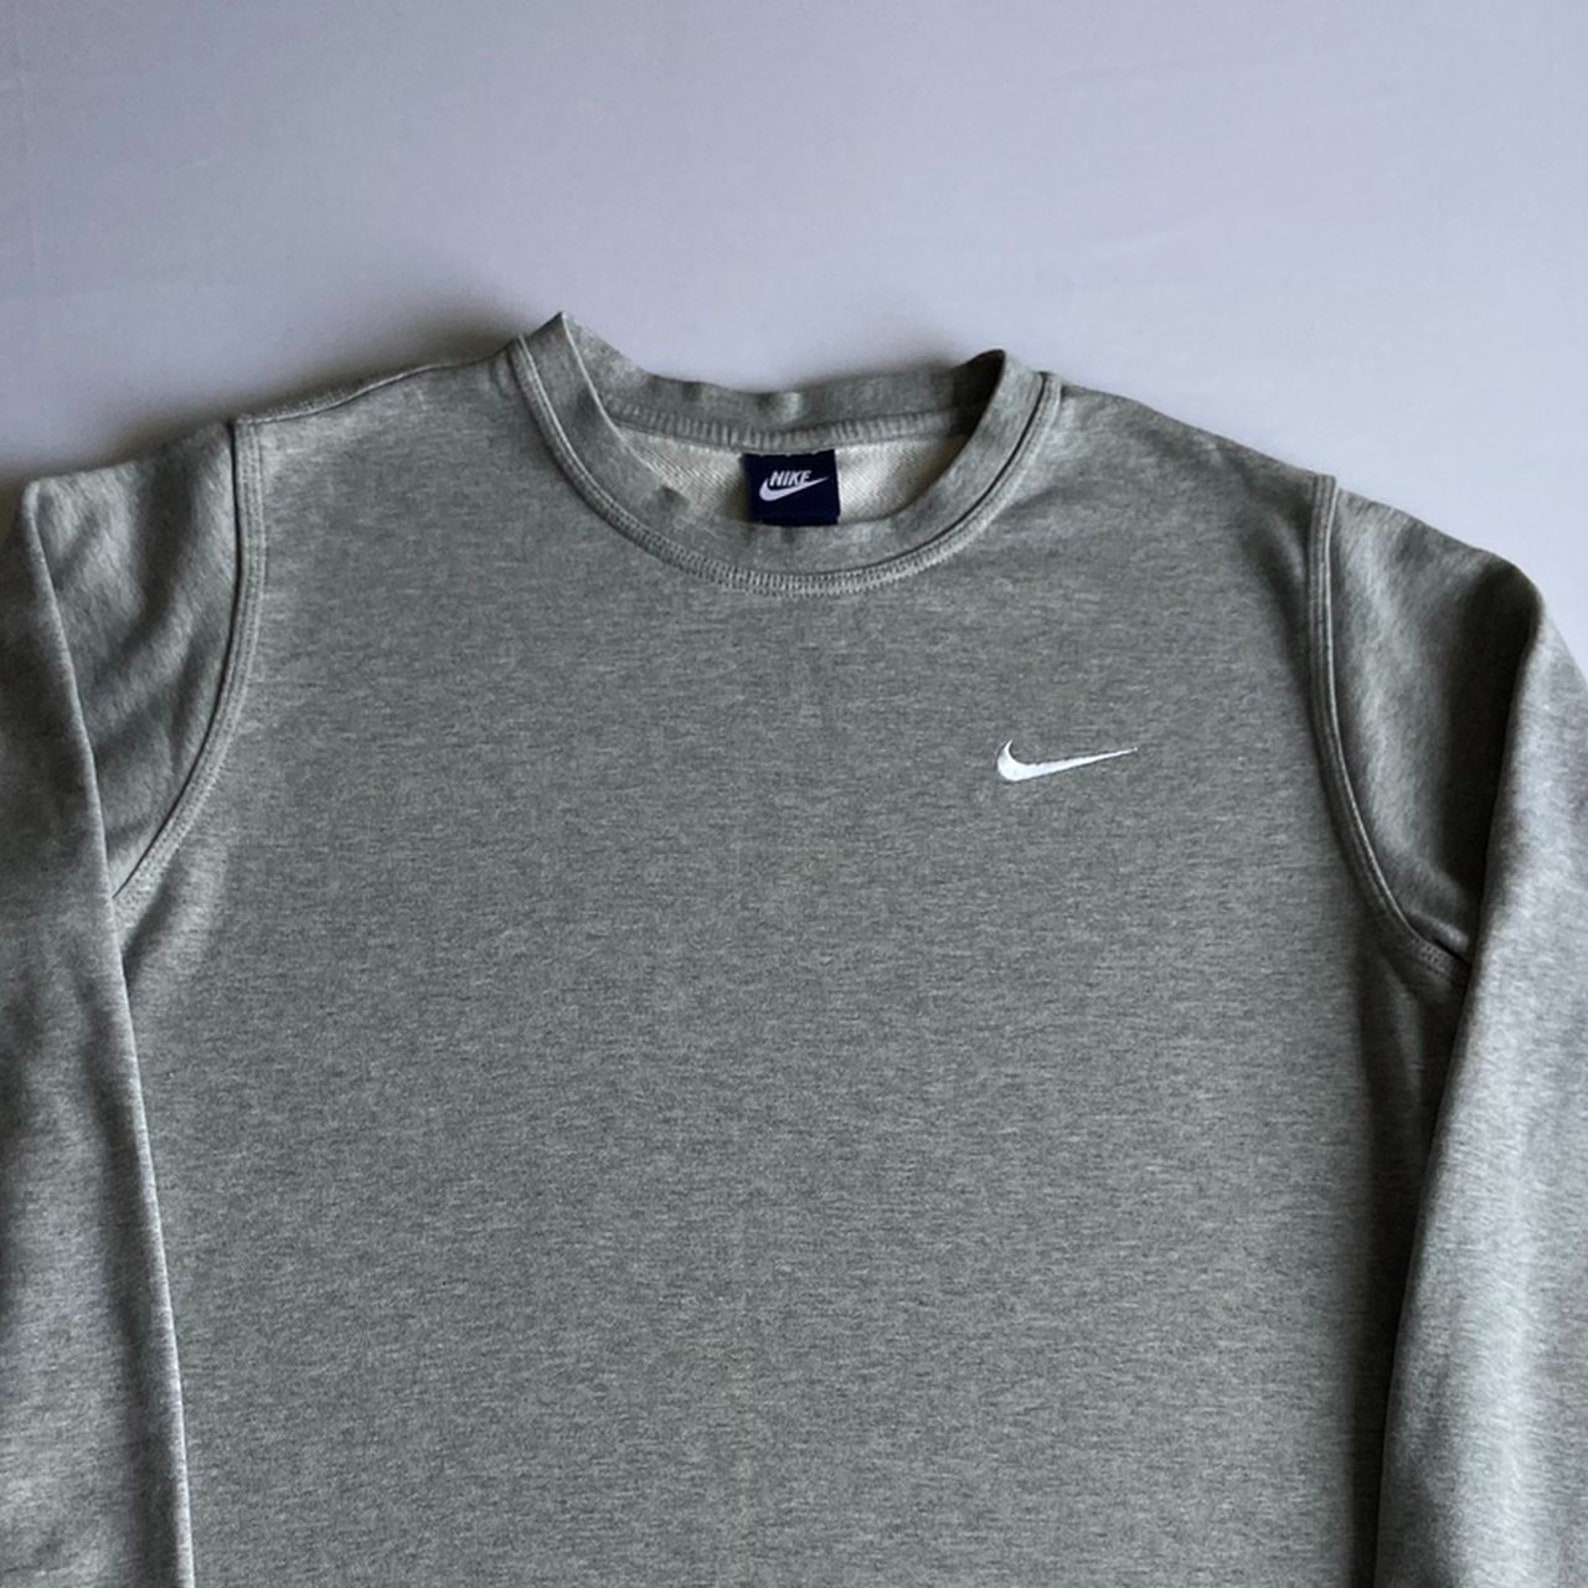 Nike Sweatshirt with small tick | Etsy